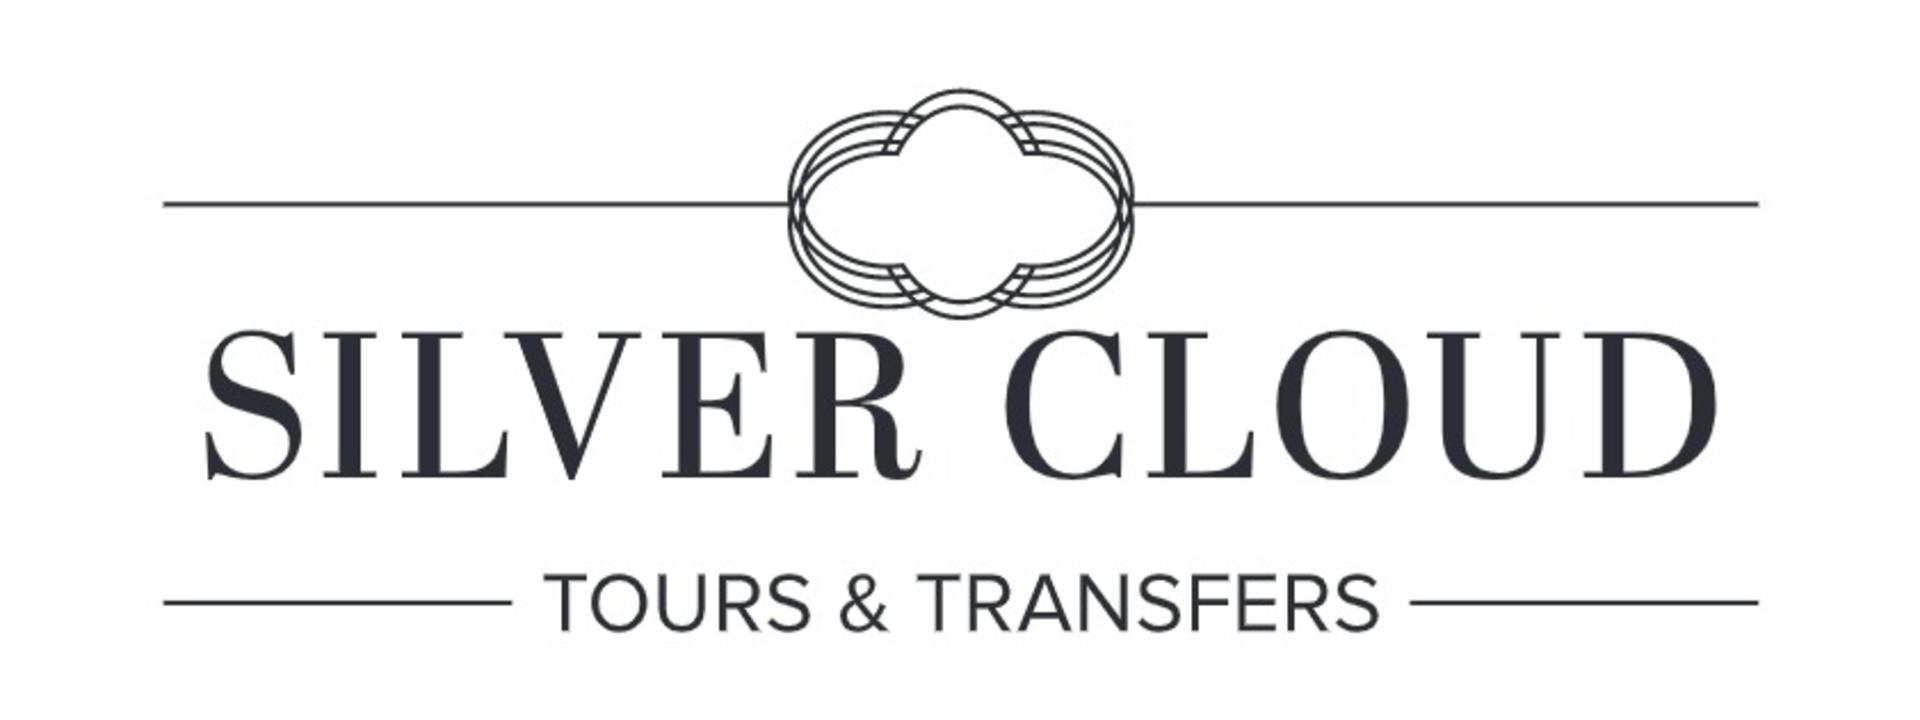 Silver Cloud logo.jpg